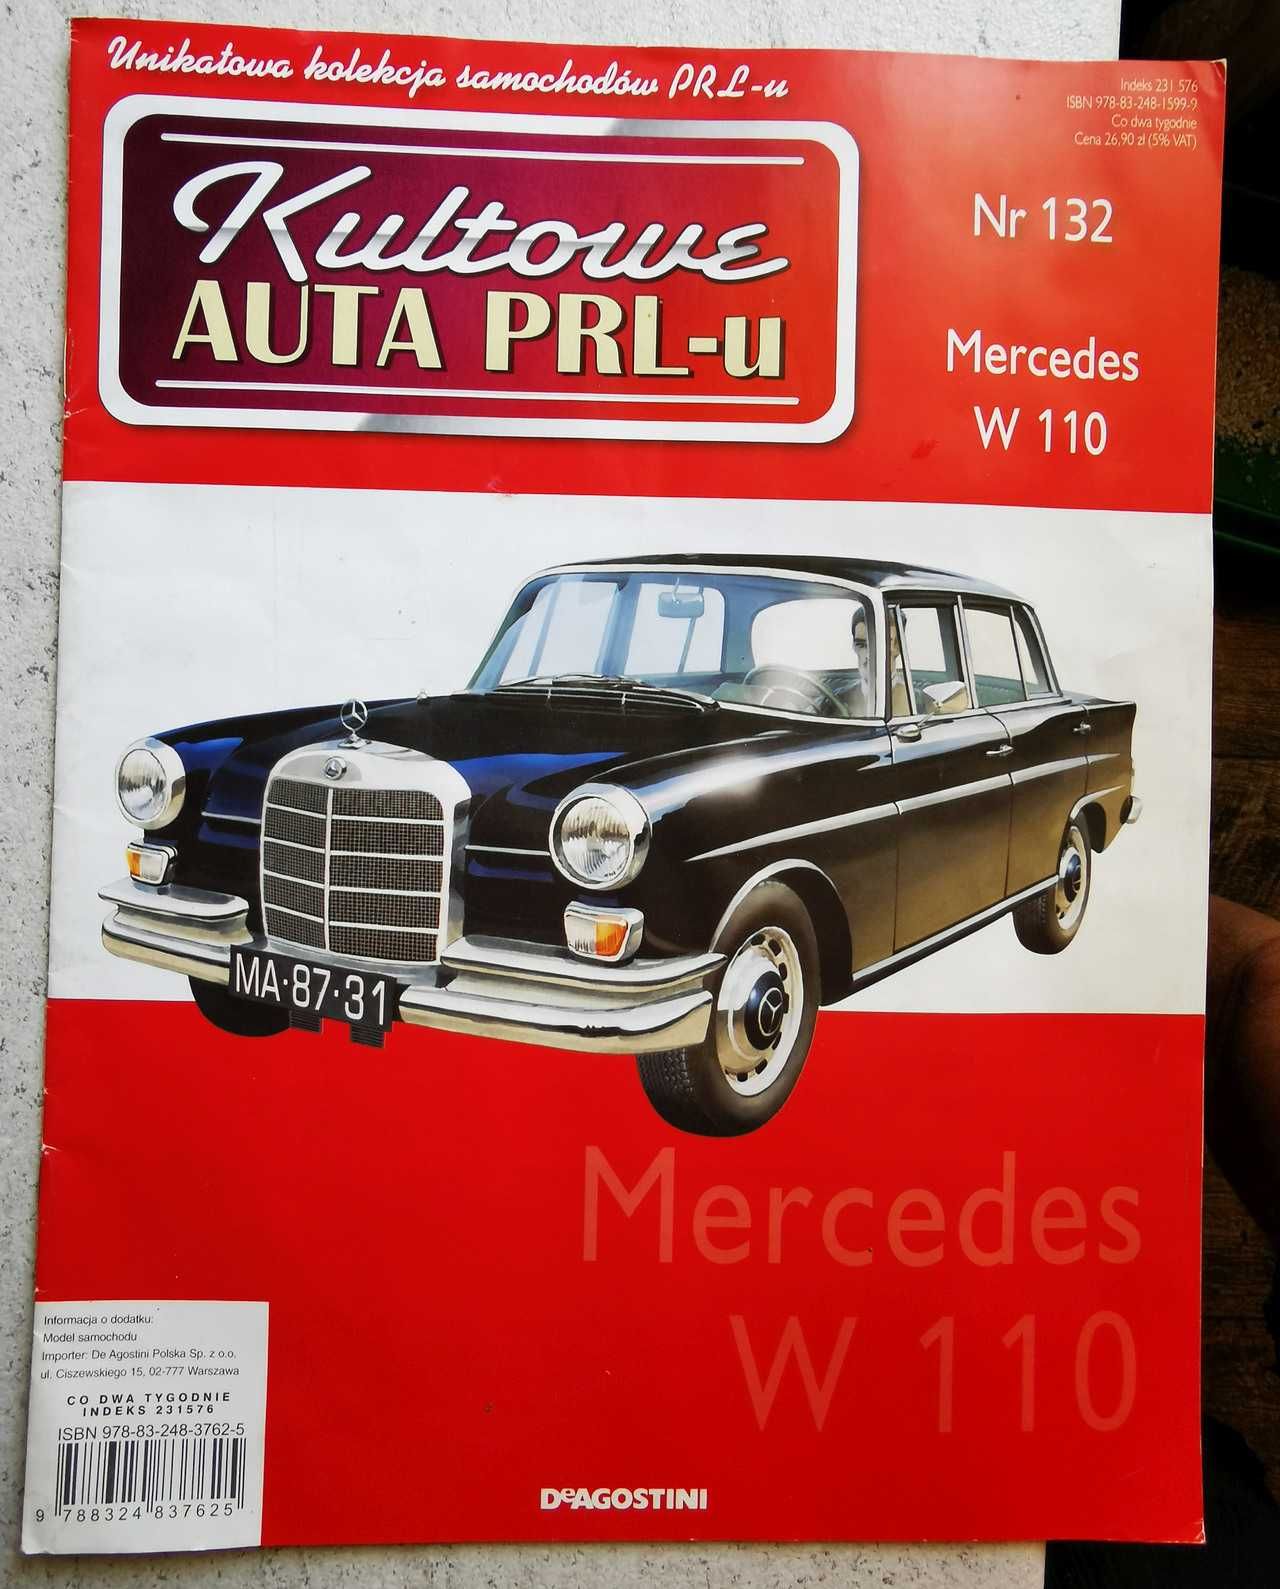 Kultowe Auta PRL-u, Mercedes W 110 plakat kolekcjonerski nr 132